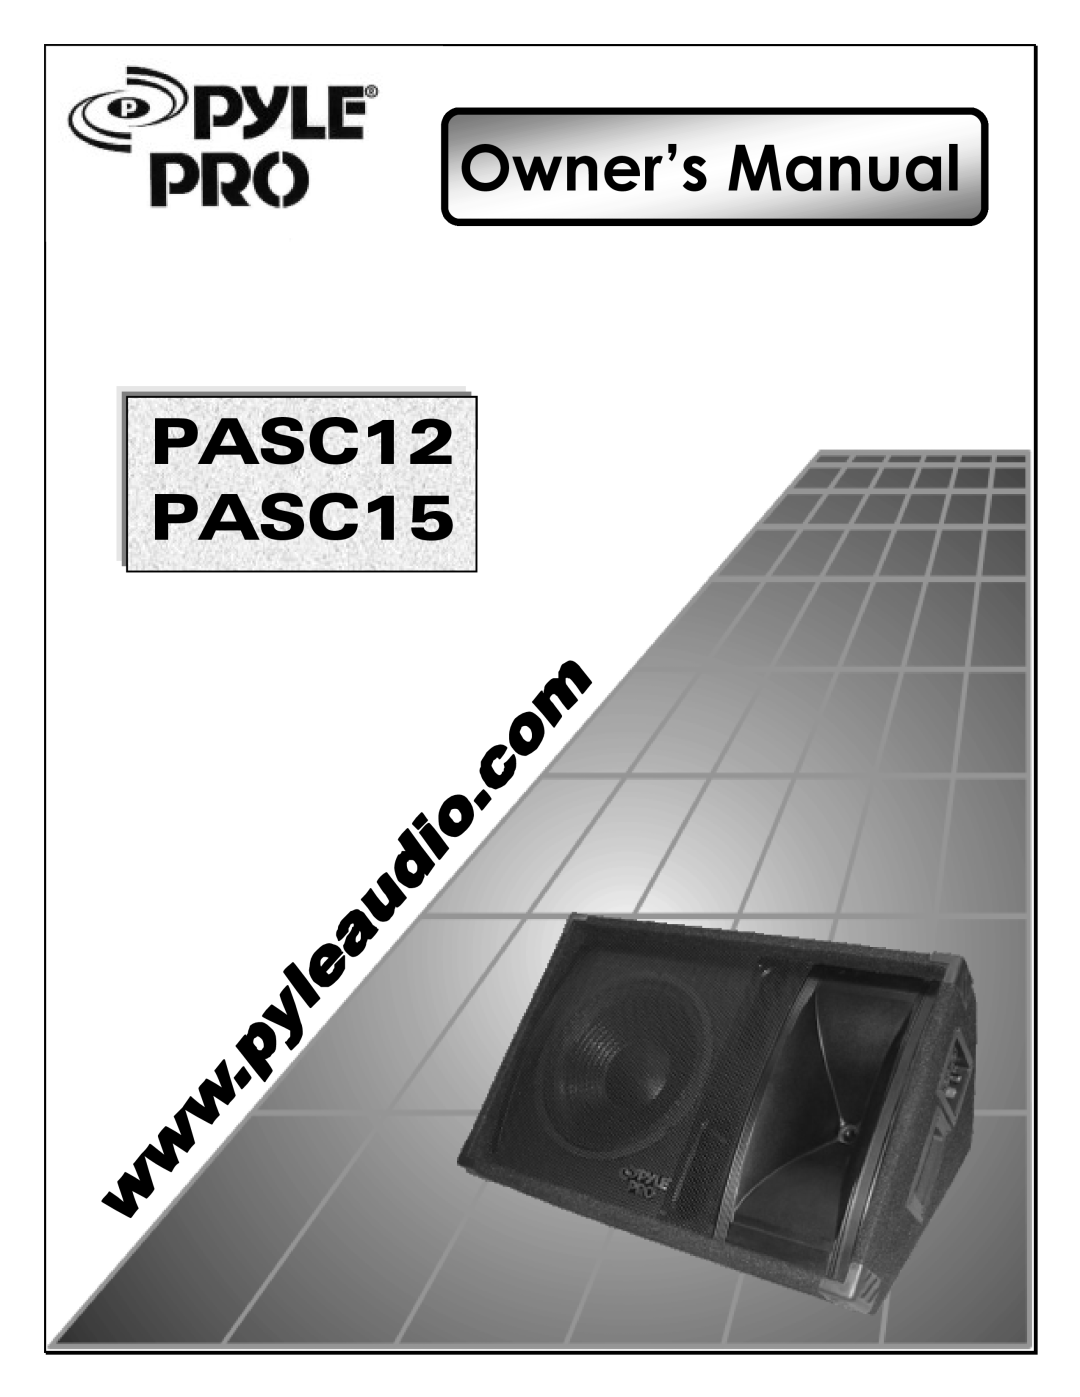 Radio Shack PASC12 manual 